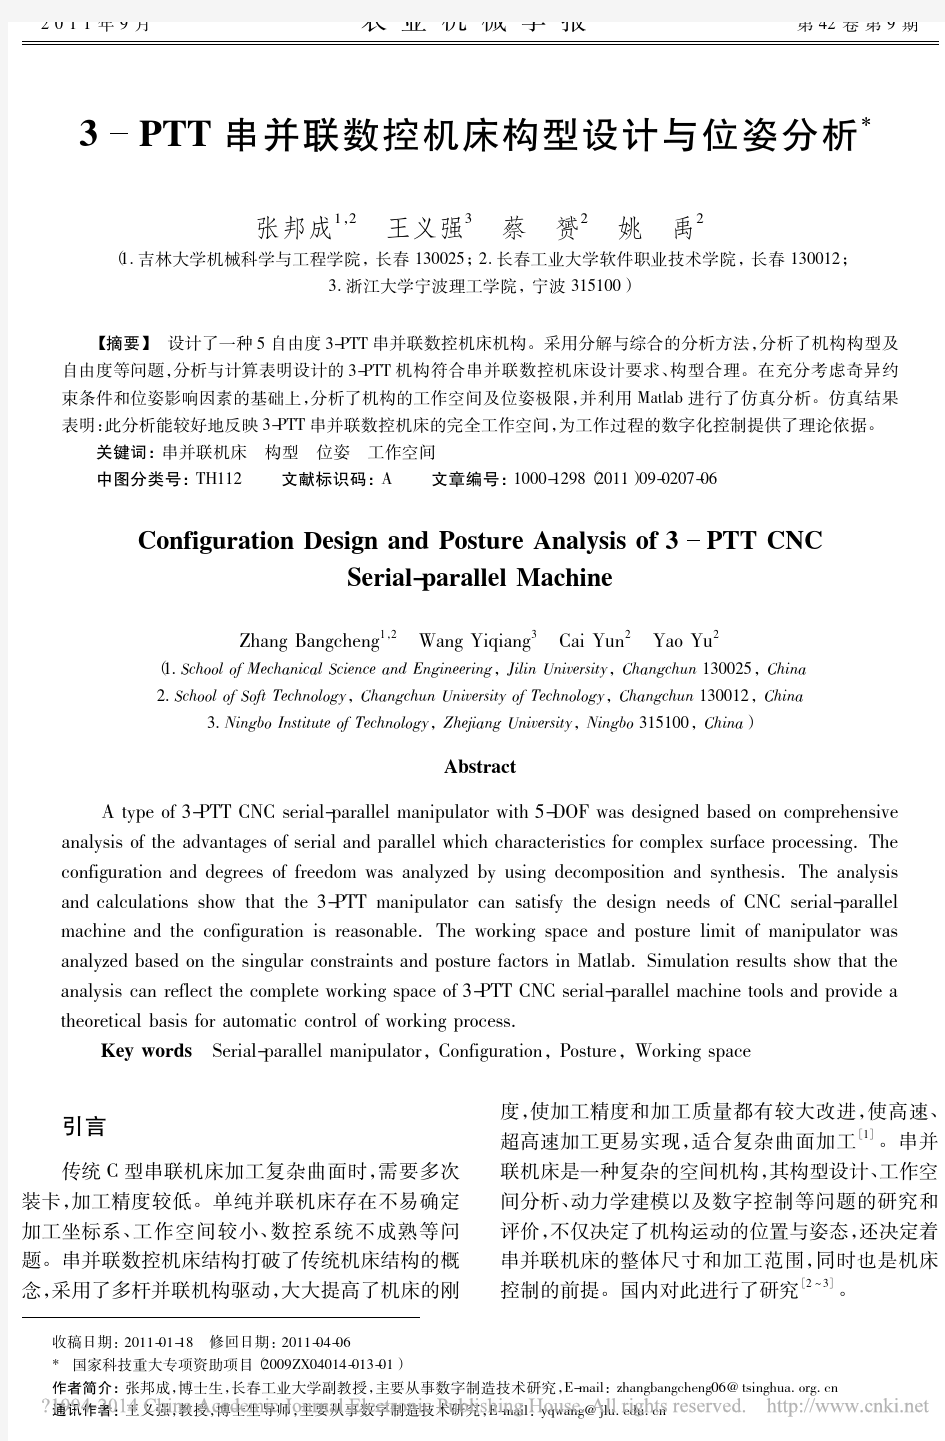 3_PTT串并联数控机床构型设计与位姿分析